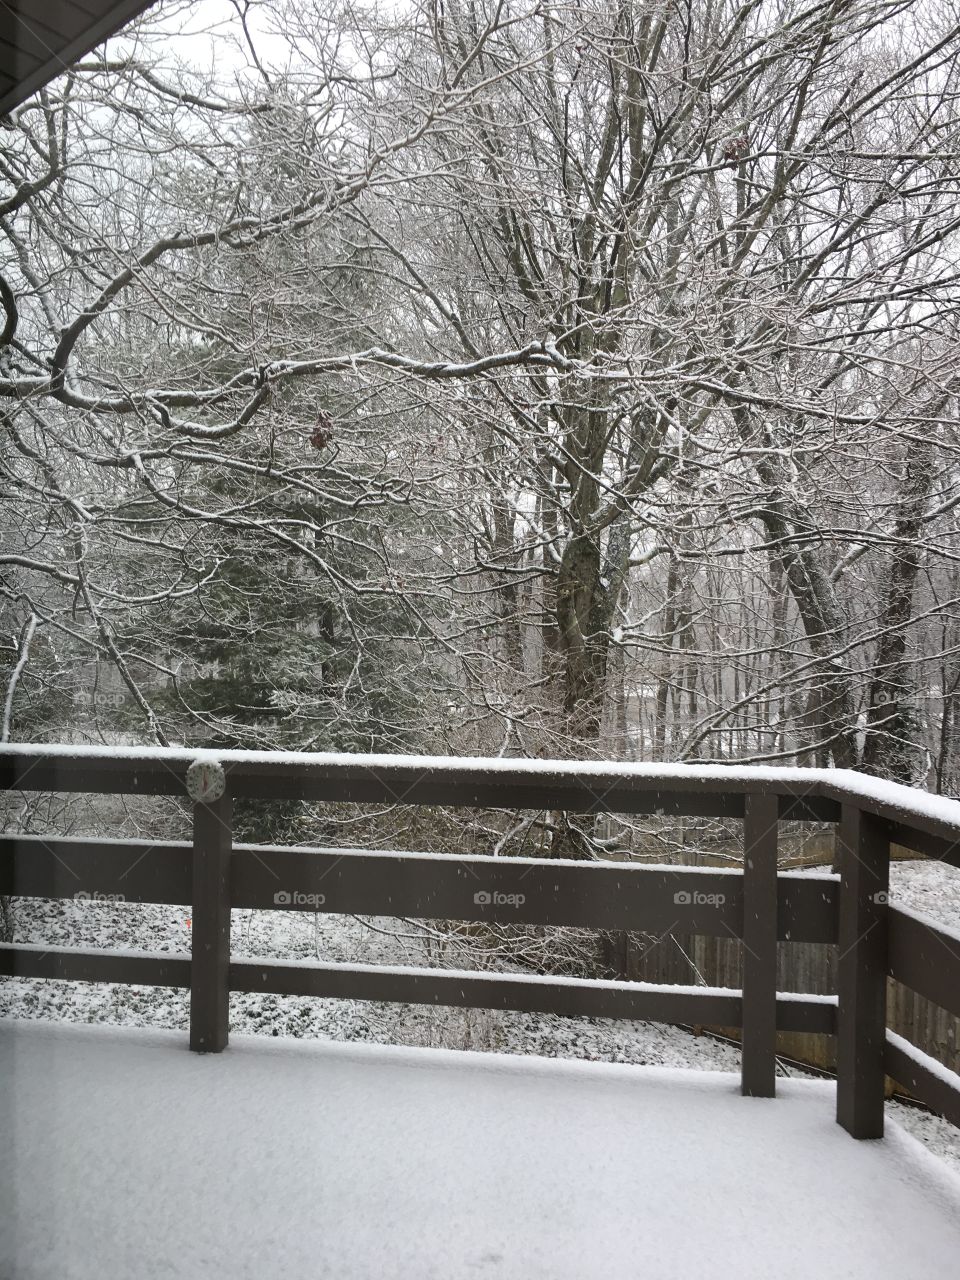 Snowy Veranda in Bloomington, Indiana
